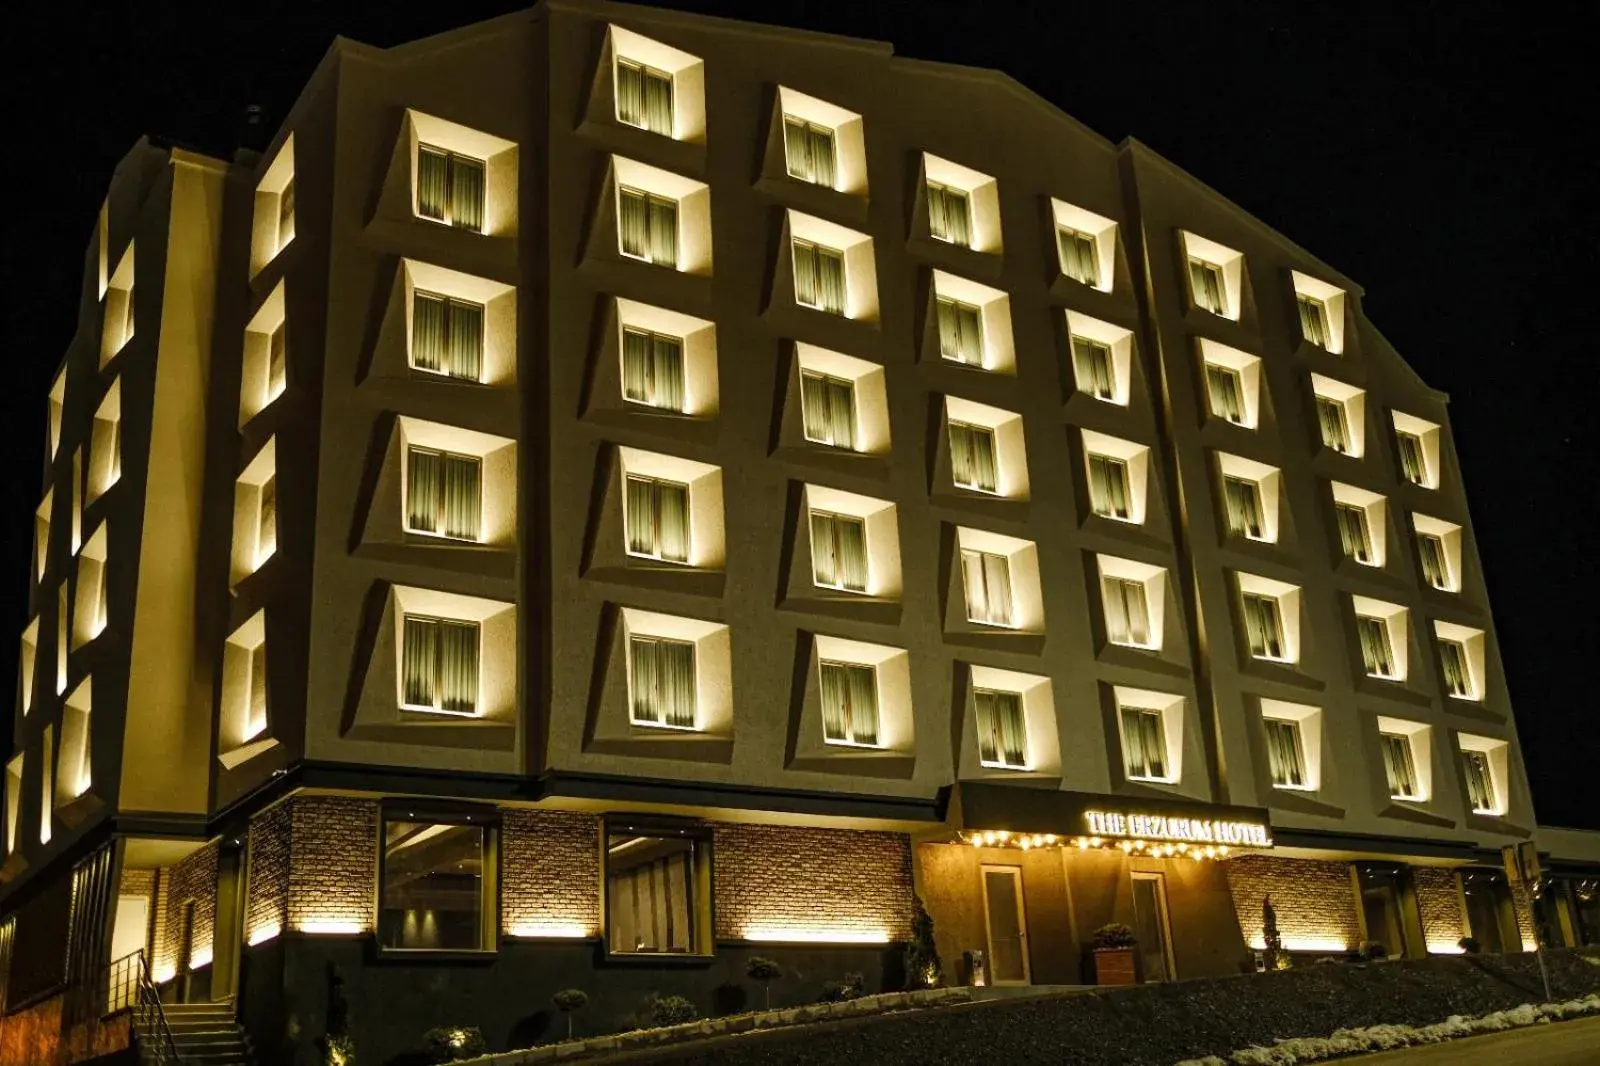 Facade/entrance, Property Building in The Erzurum Hotel